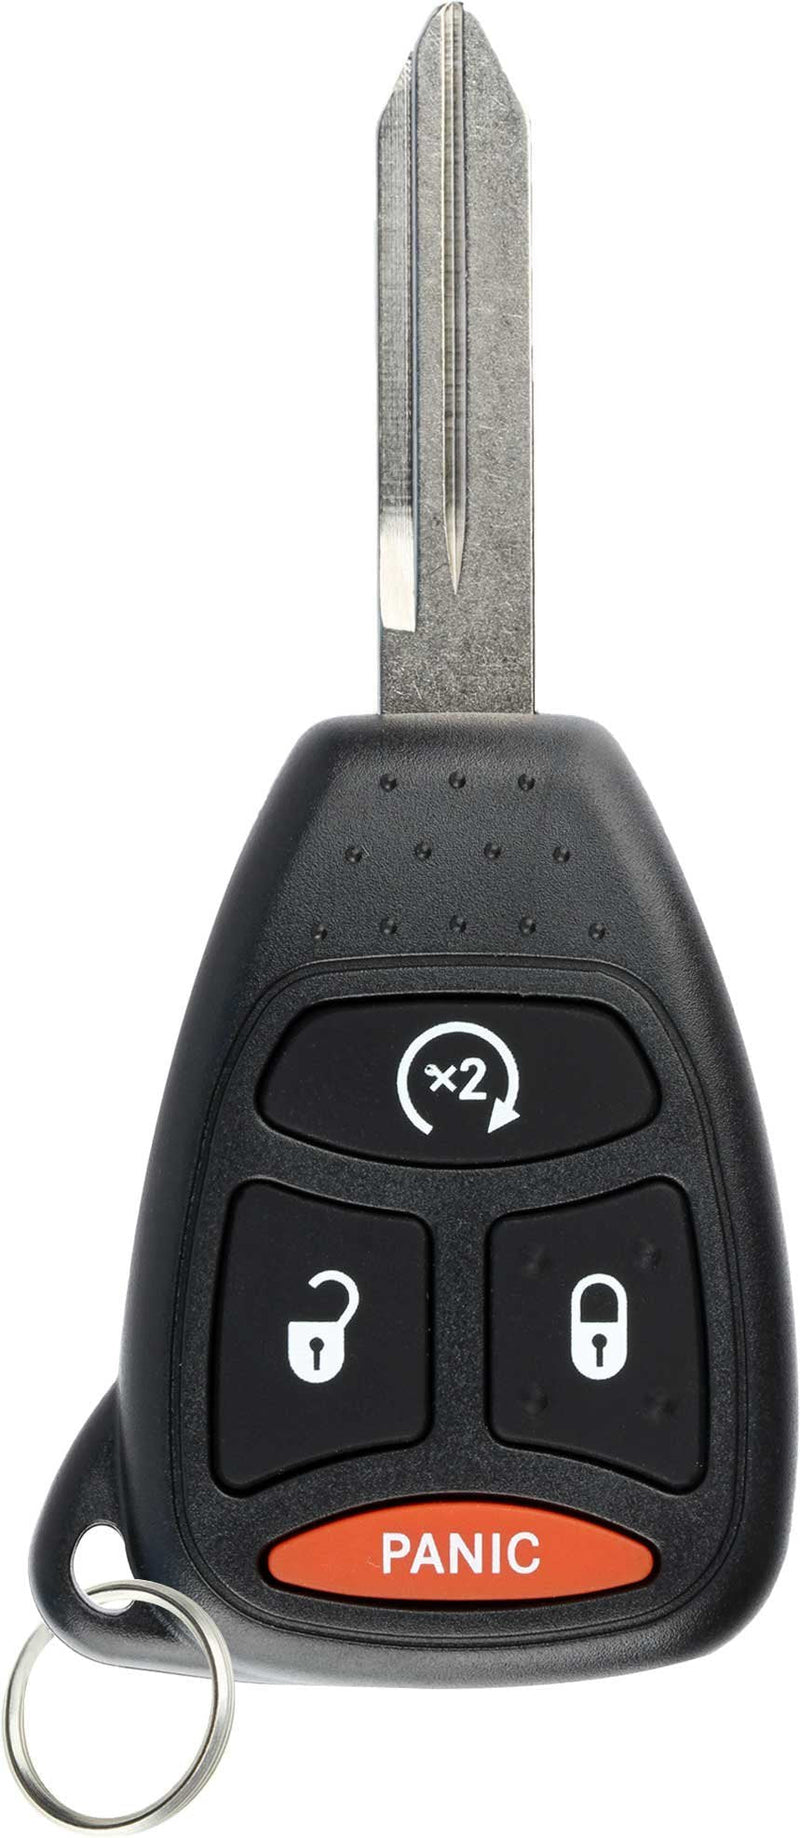  [AUSTRALIA] - KeylessOption Keyless Remote Start Fob Uncut Car Ignition Key for Dodge Dakota, Ram, Durango, KOBDT04A, OHT692714AA